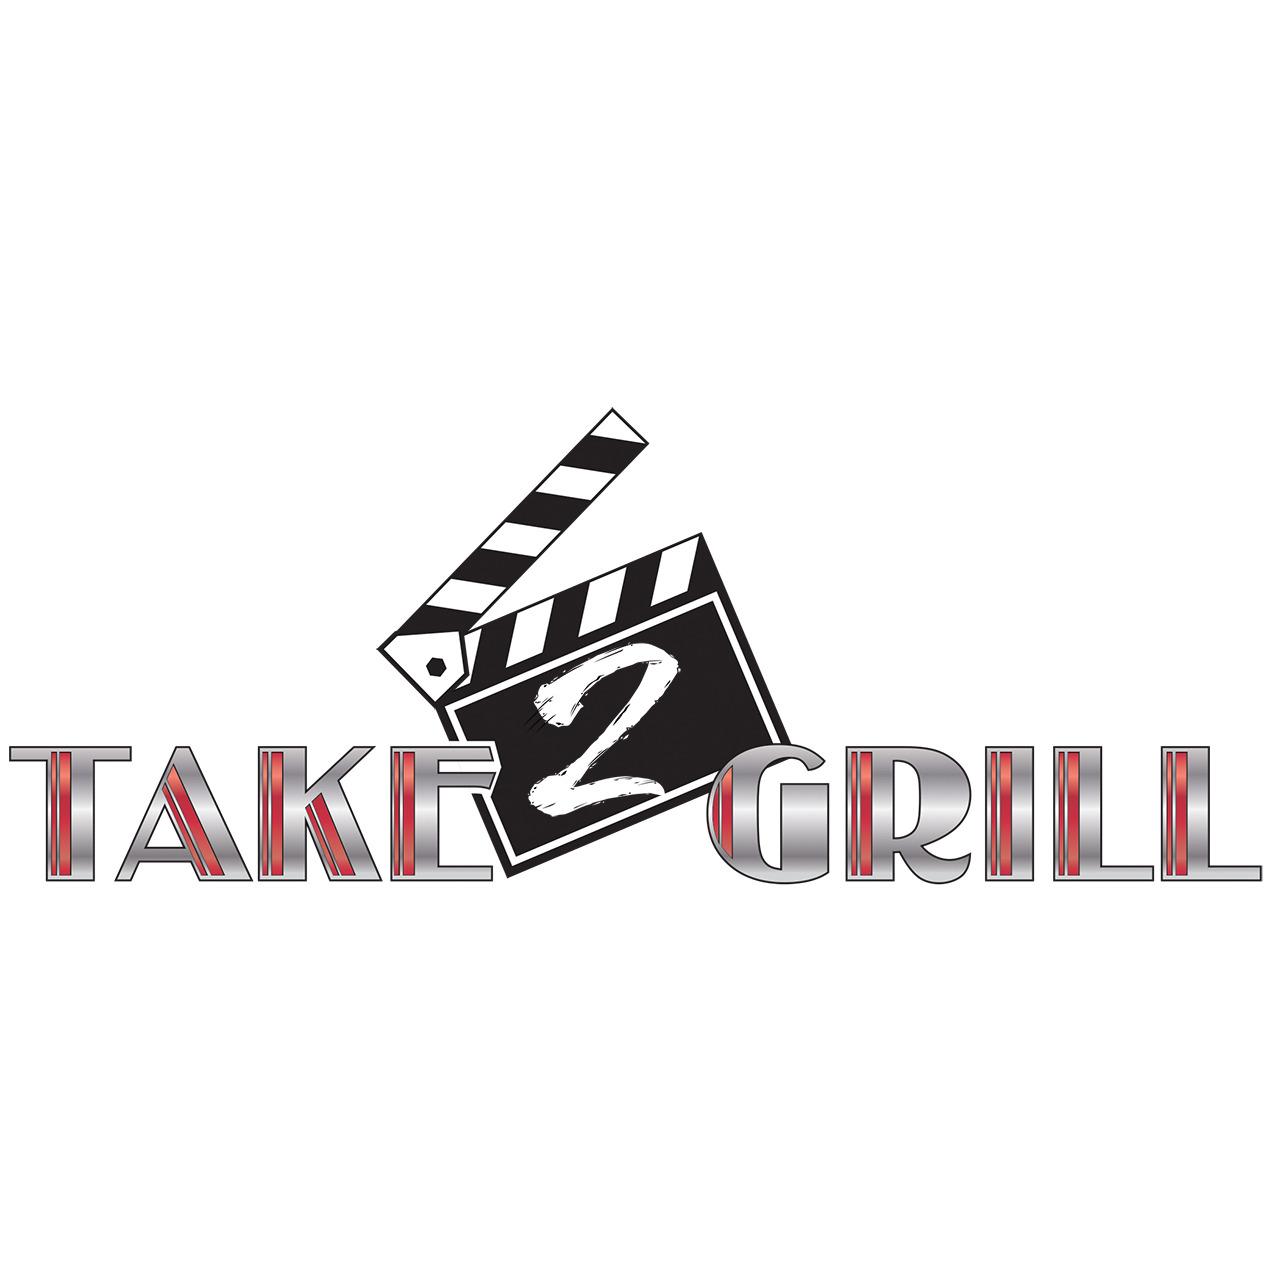 Take 2 Grill Logo